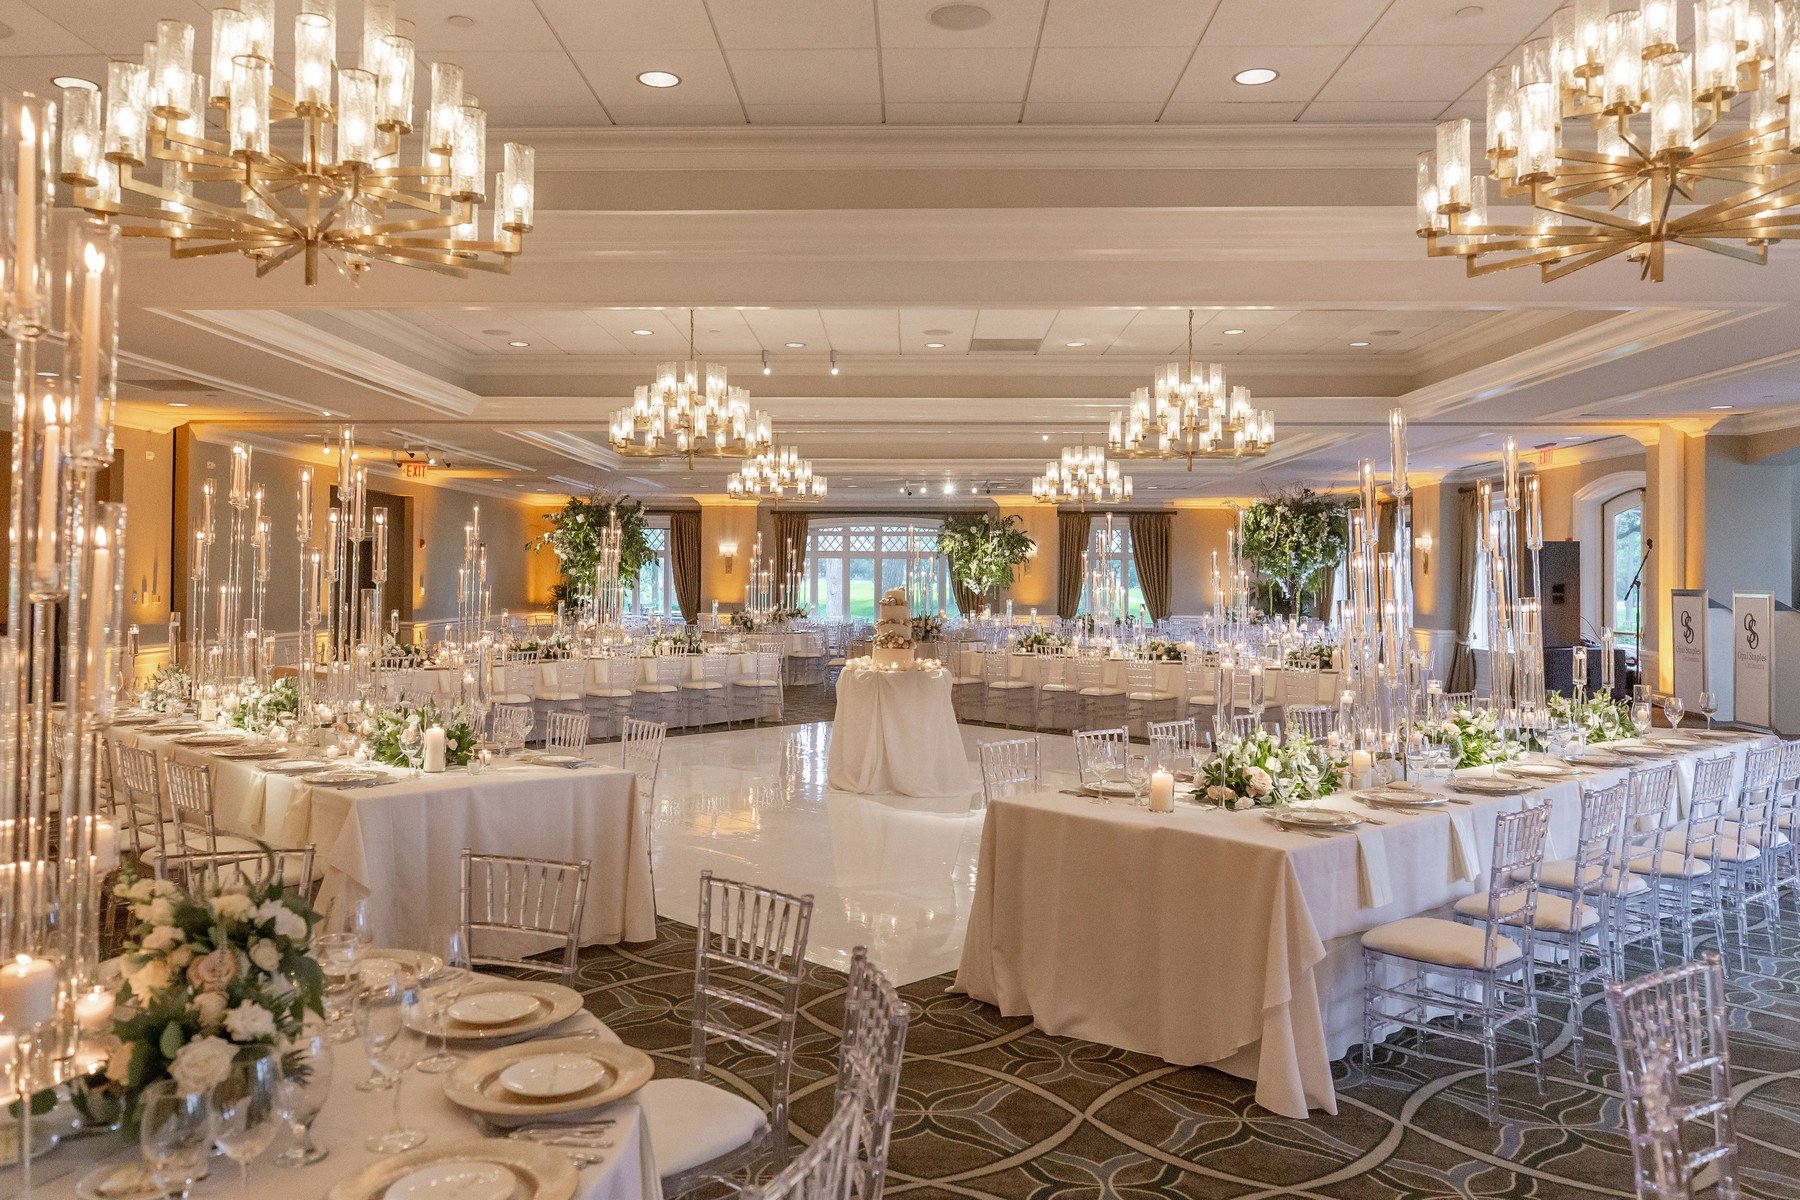 Butterfield Country Club: Romantic and Classic Wedding Venue | Yanni Design  Studio